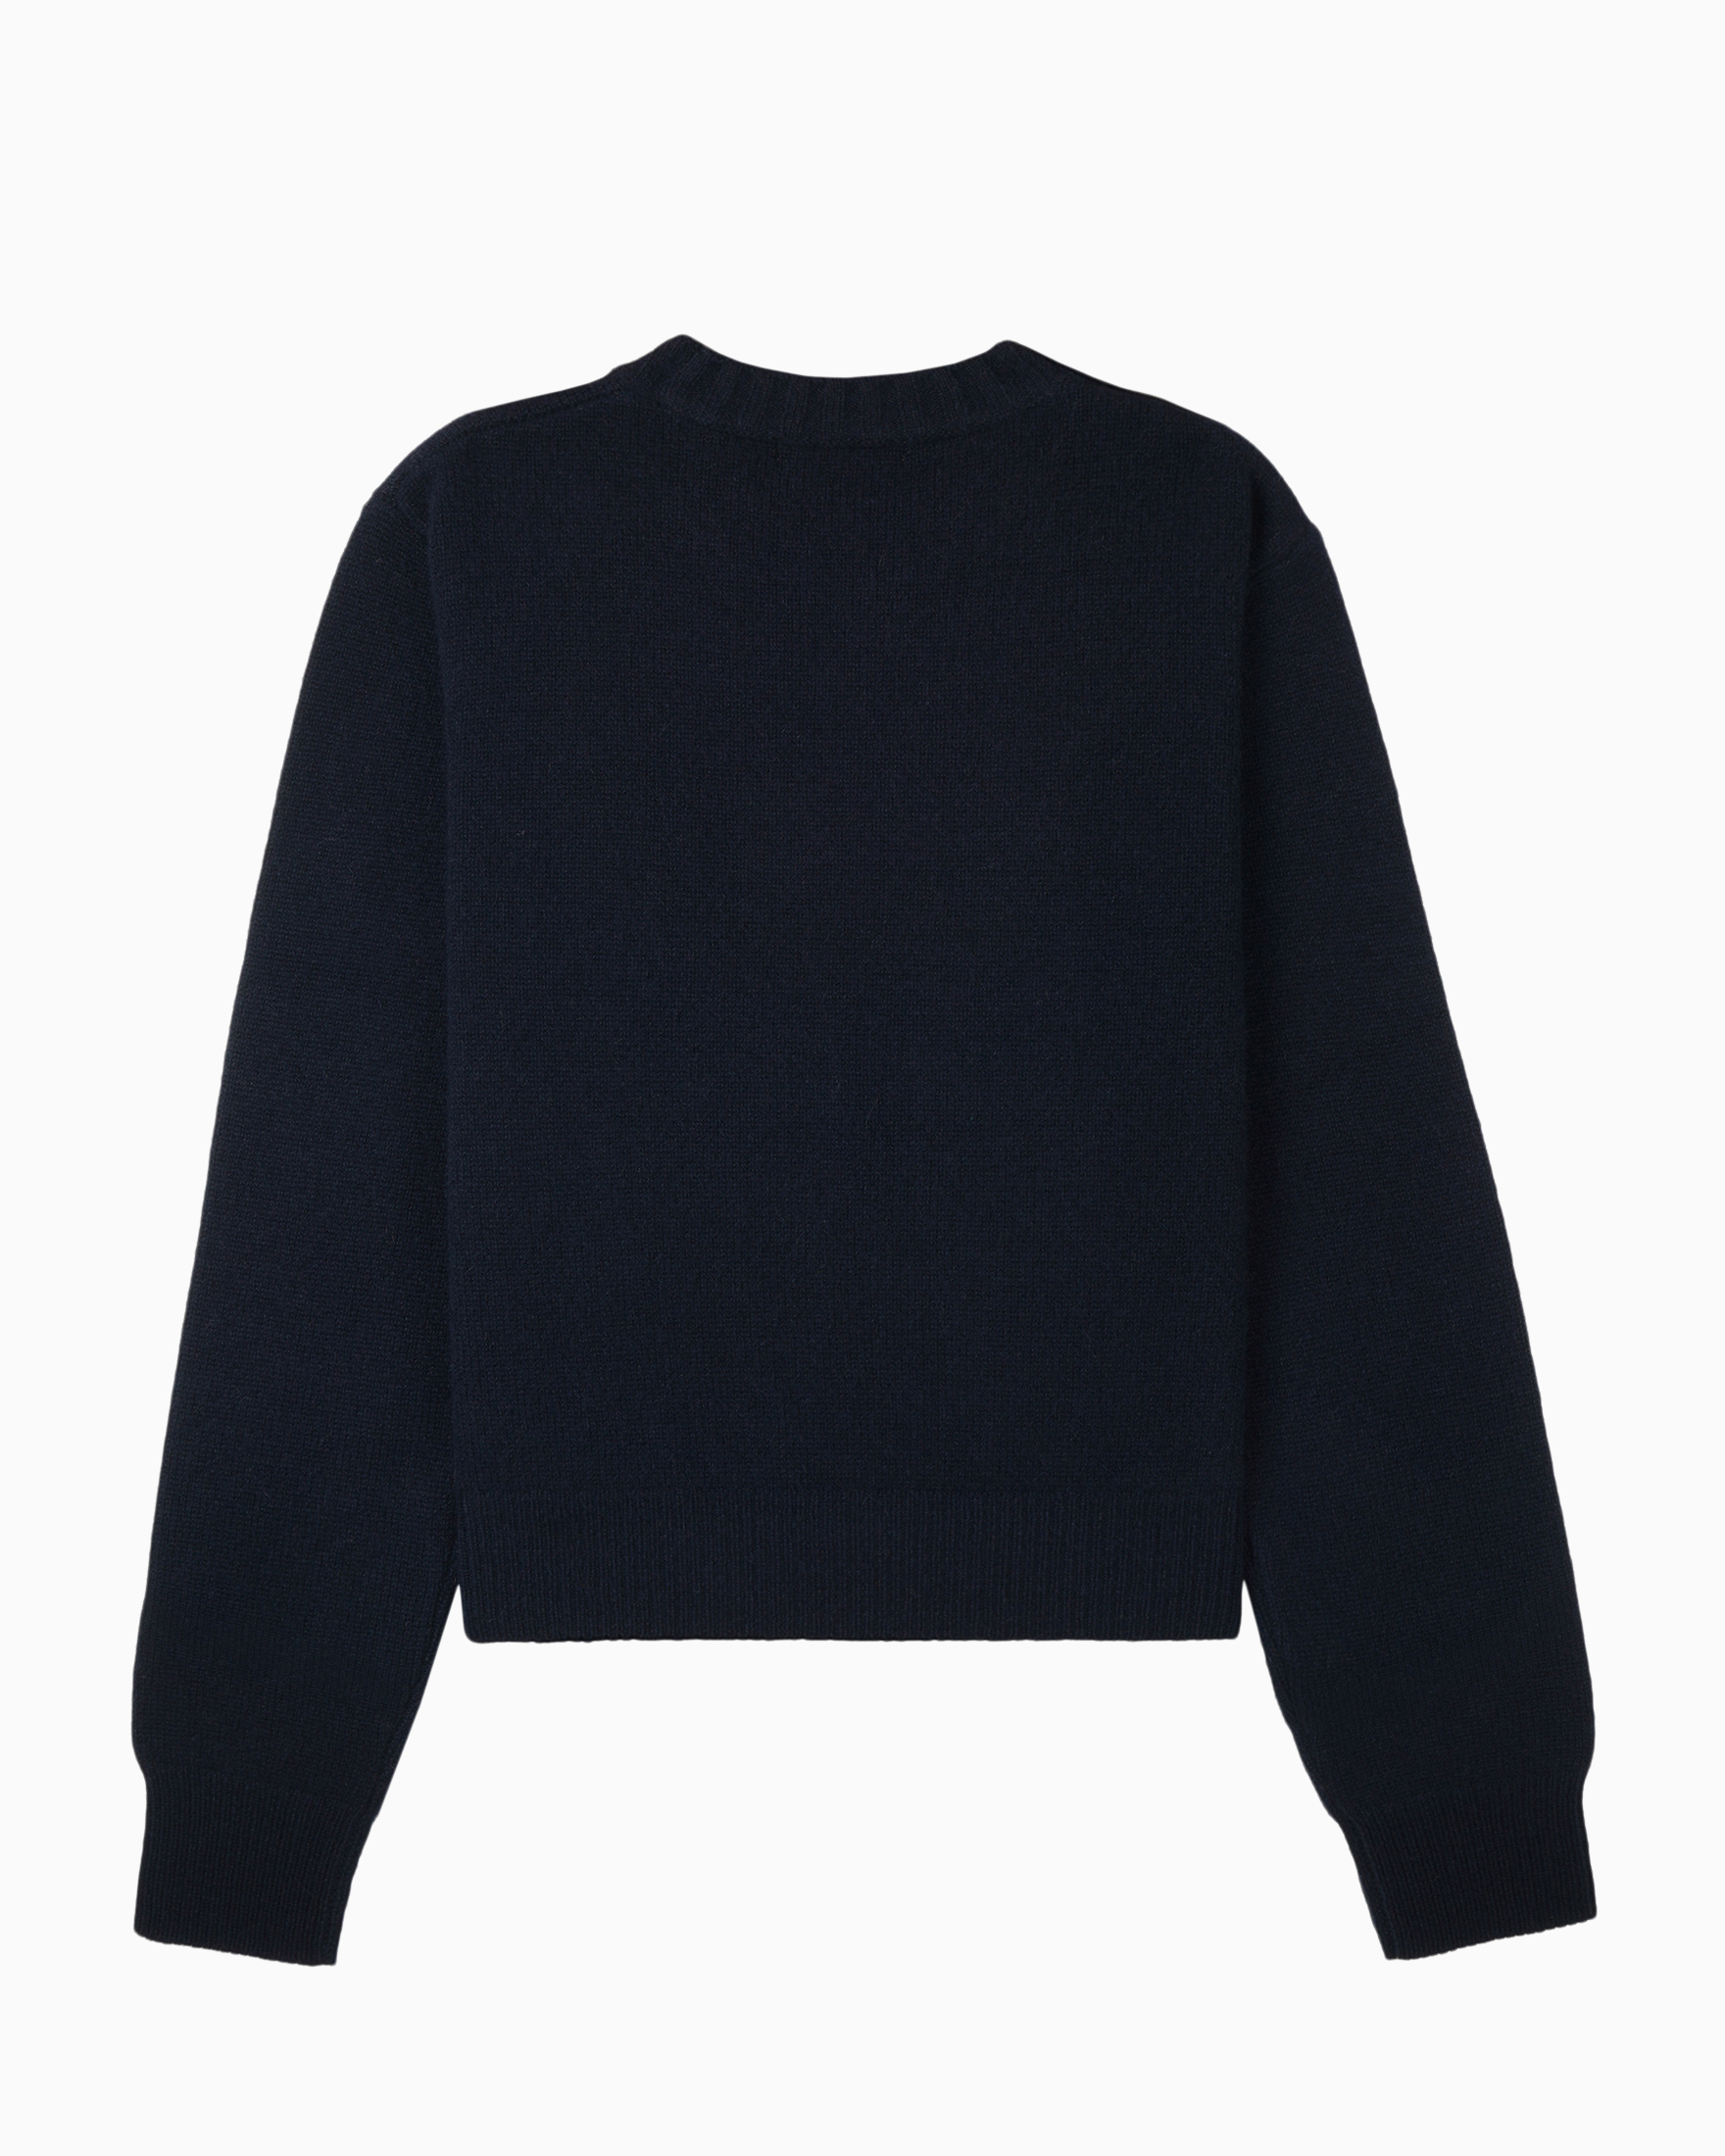 Cashmere Sweater $164 Sporty & Rich Tops Crewnecks Blue